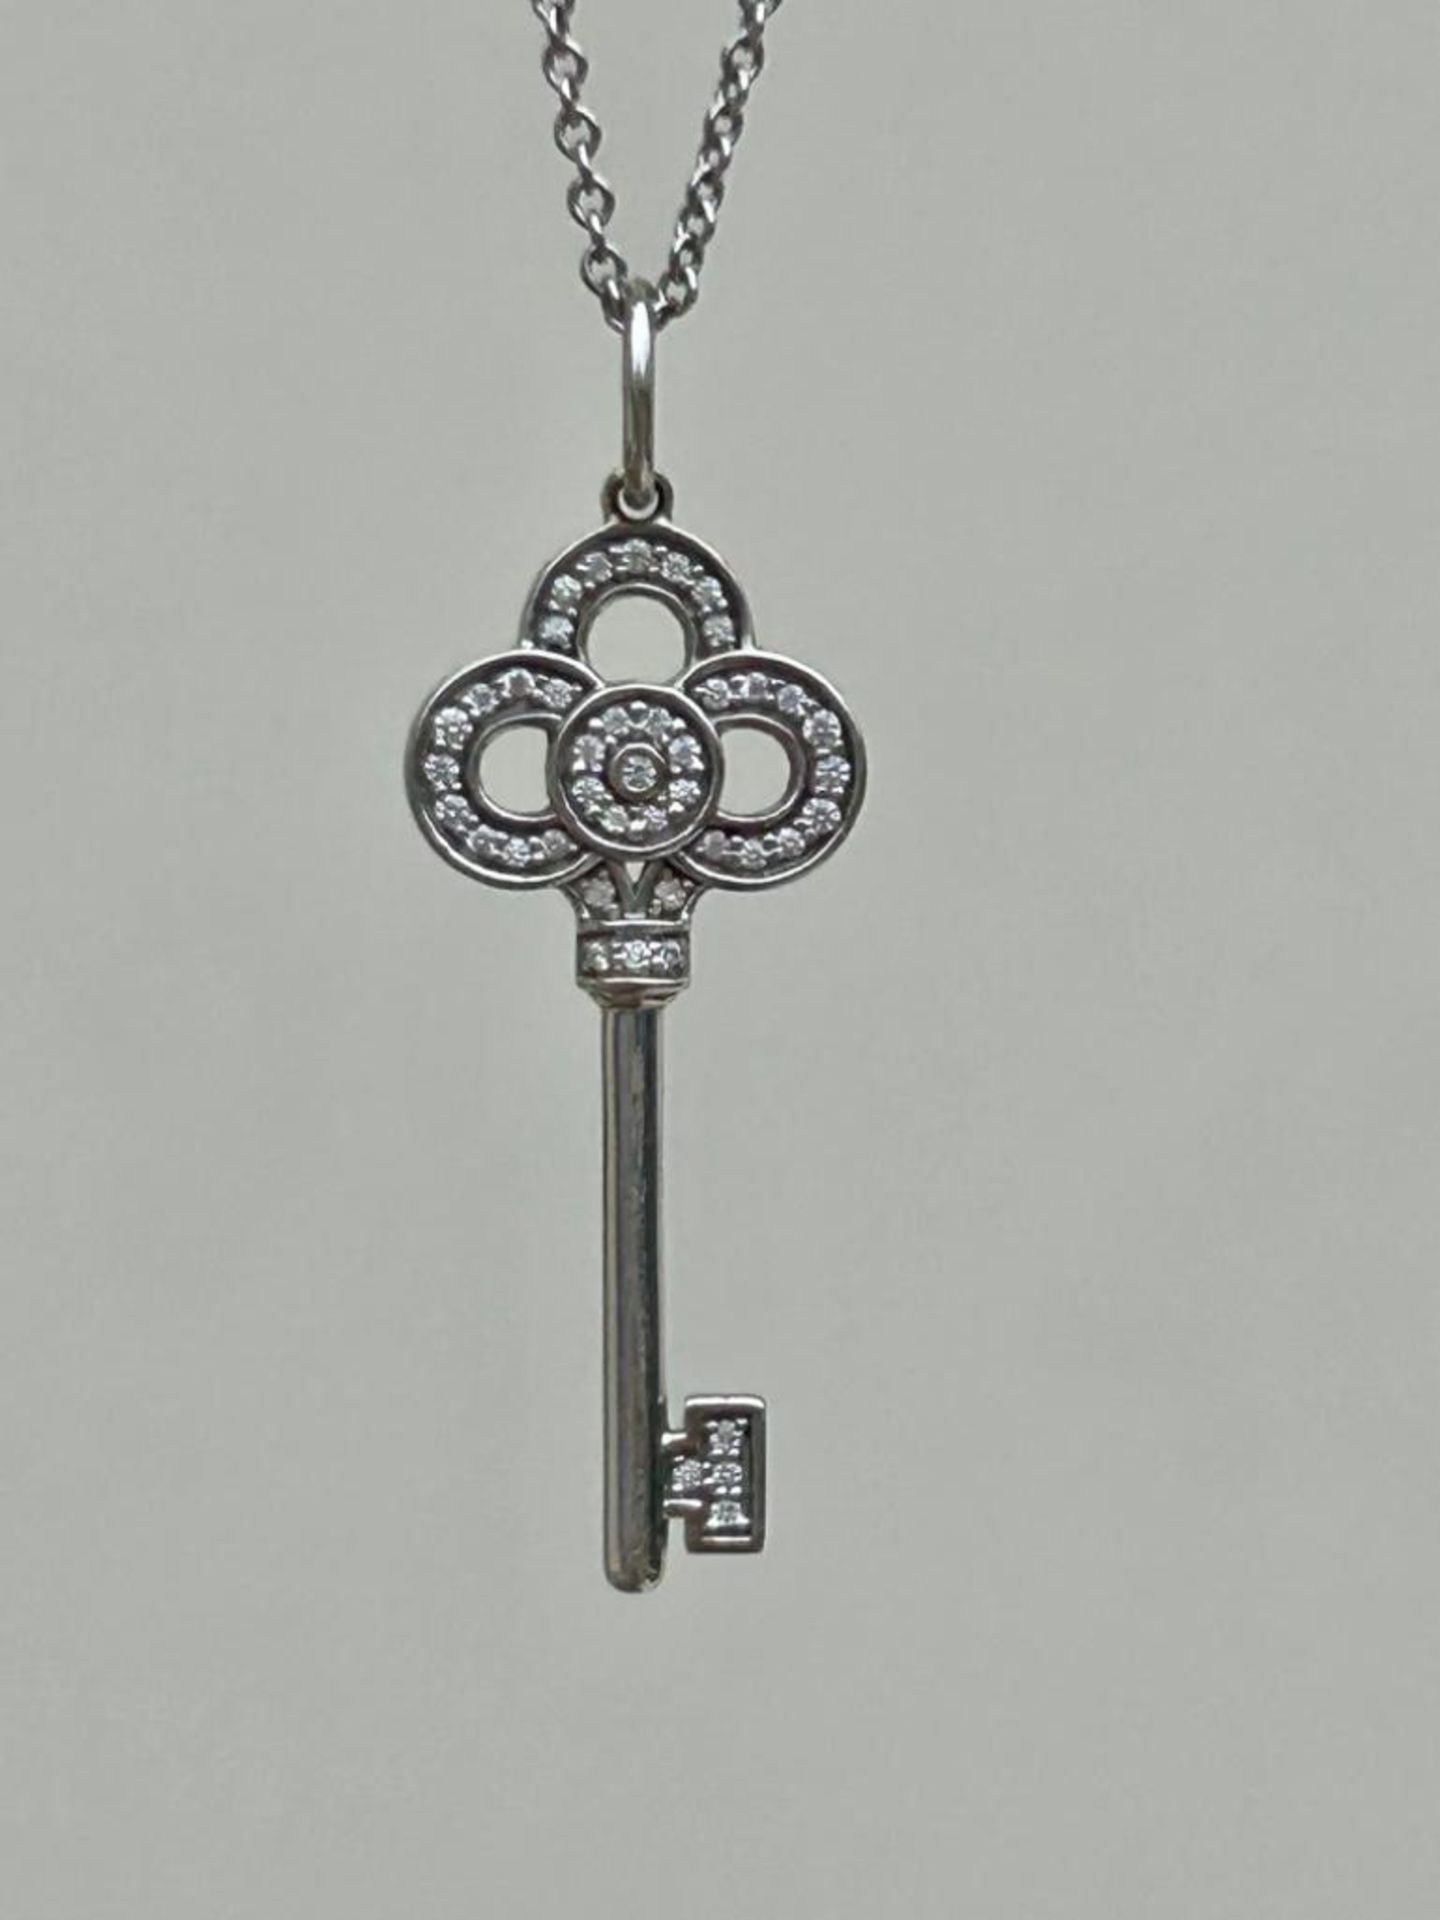 Amazing Tiffany 18ct White Gold Diamond Key Pendant on Tiffany Chain